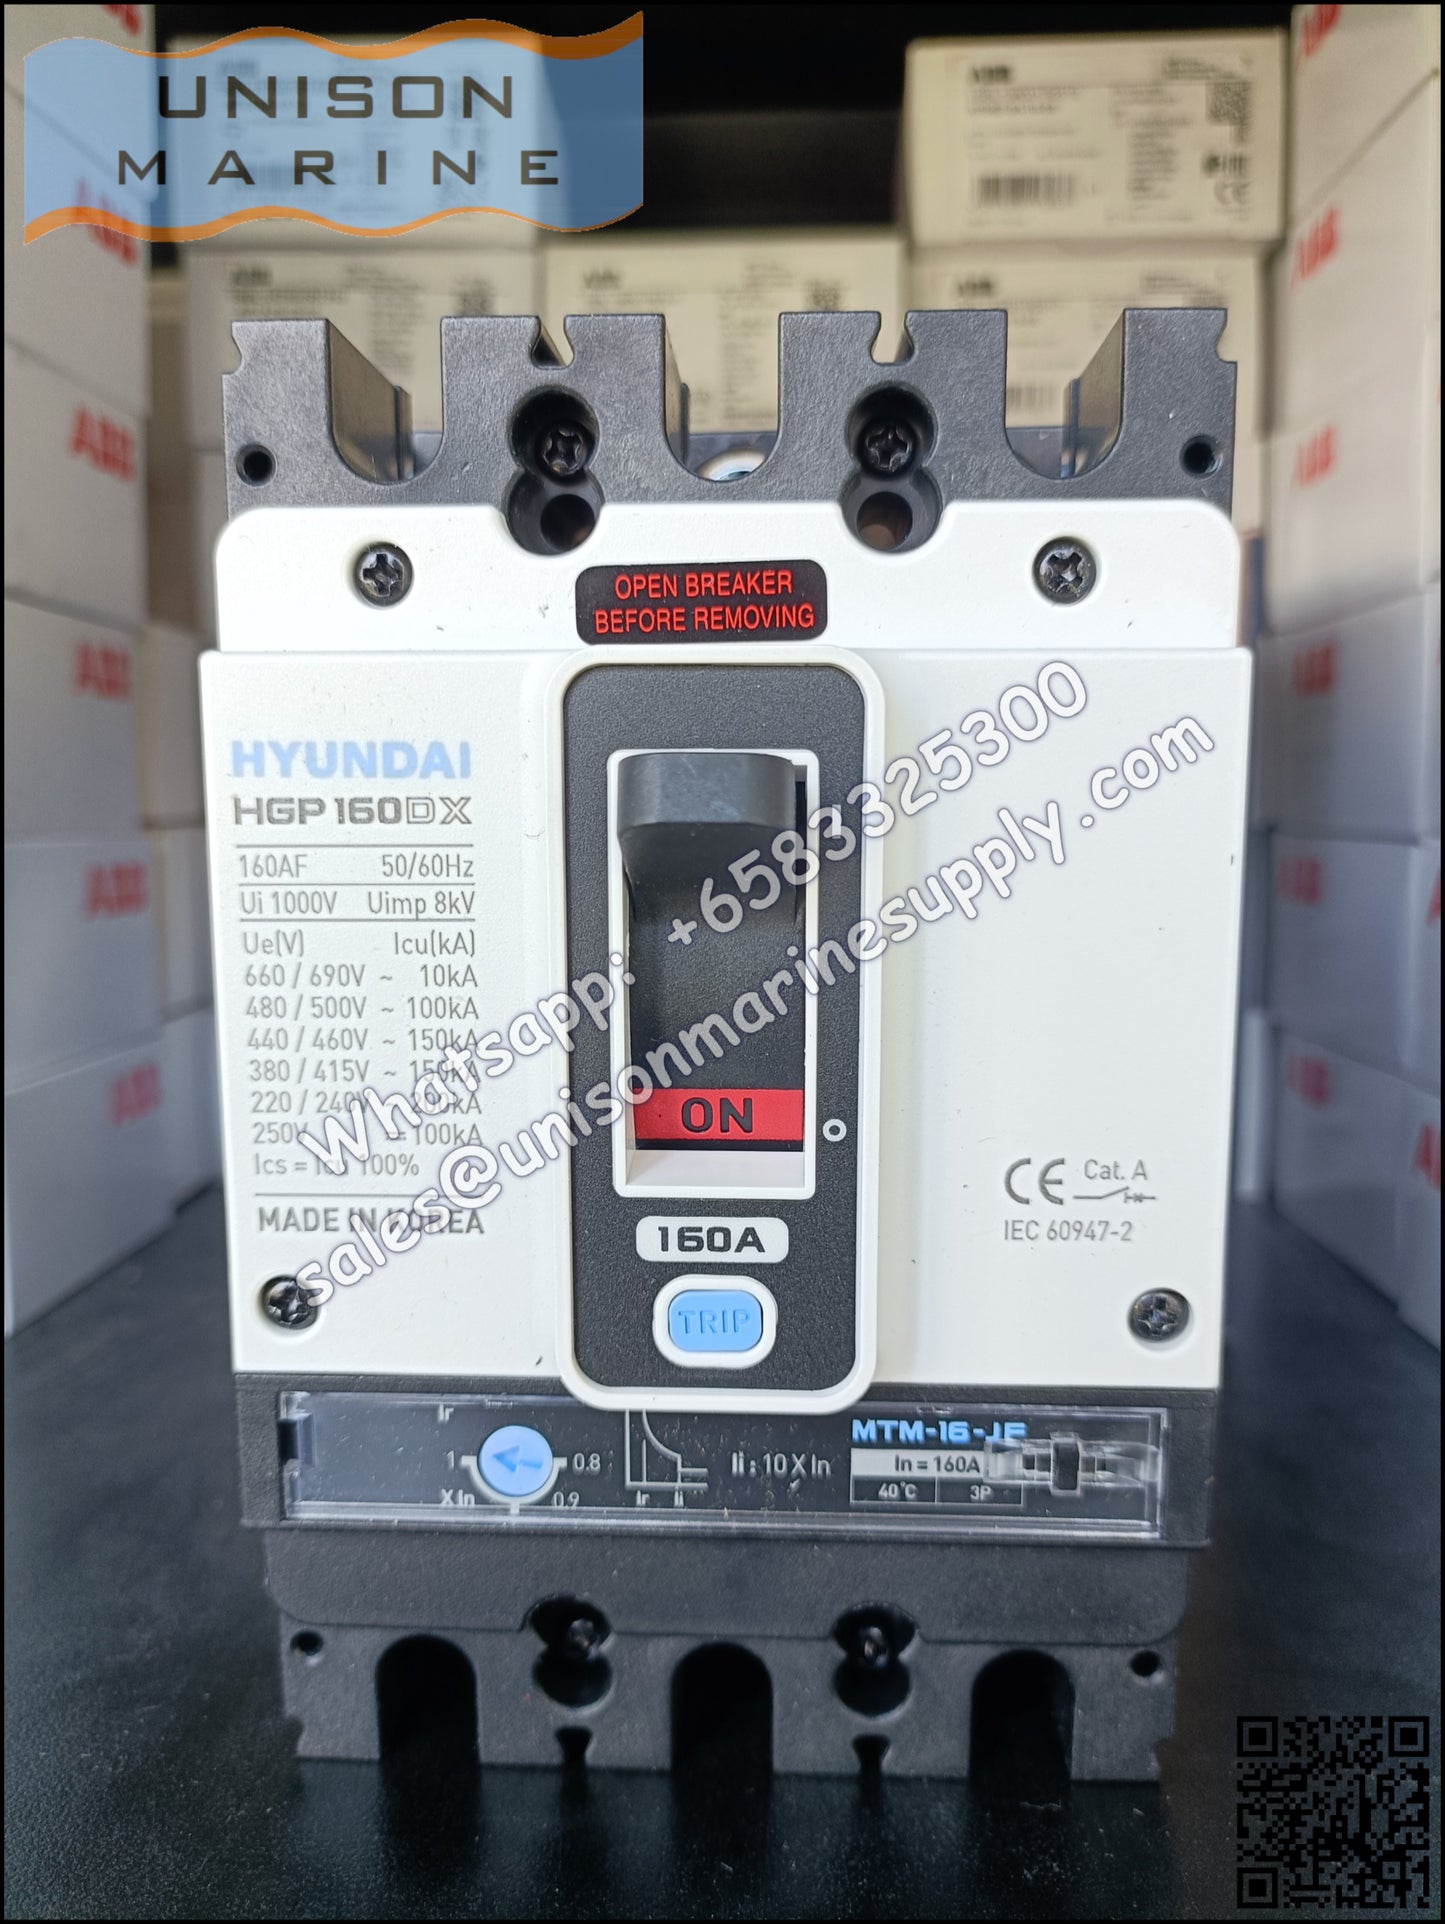 Hyundai Marine Circuit Breaker (MCCB) - HGP160DX 3P Fixed / Plug-in Type